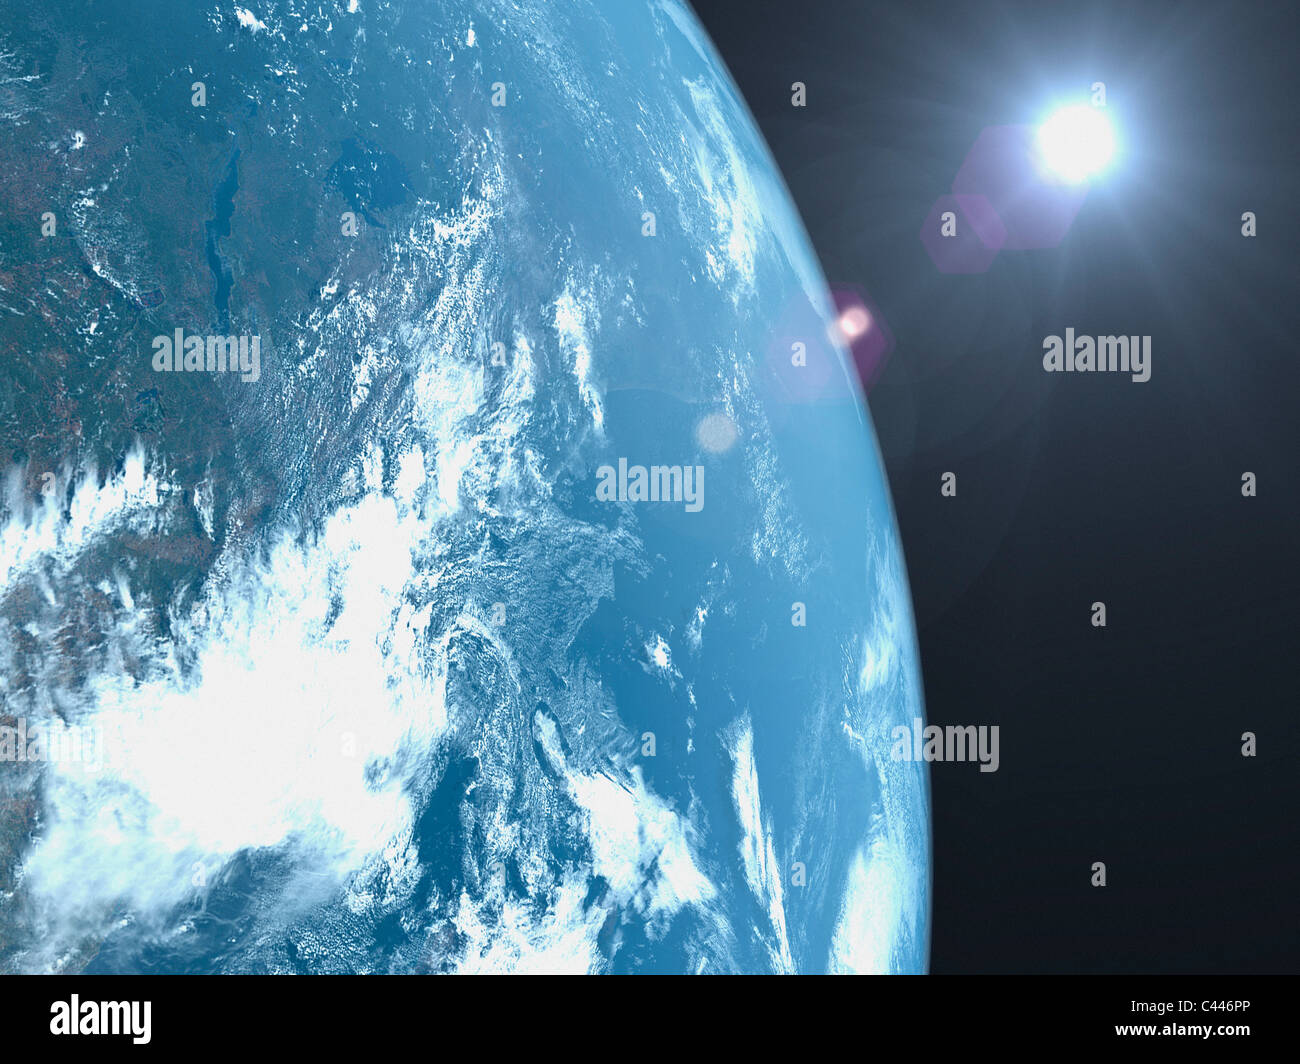 Planet earth, satellite view Stock Photo